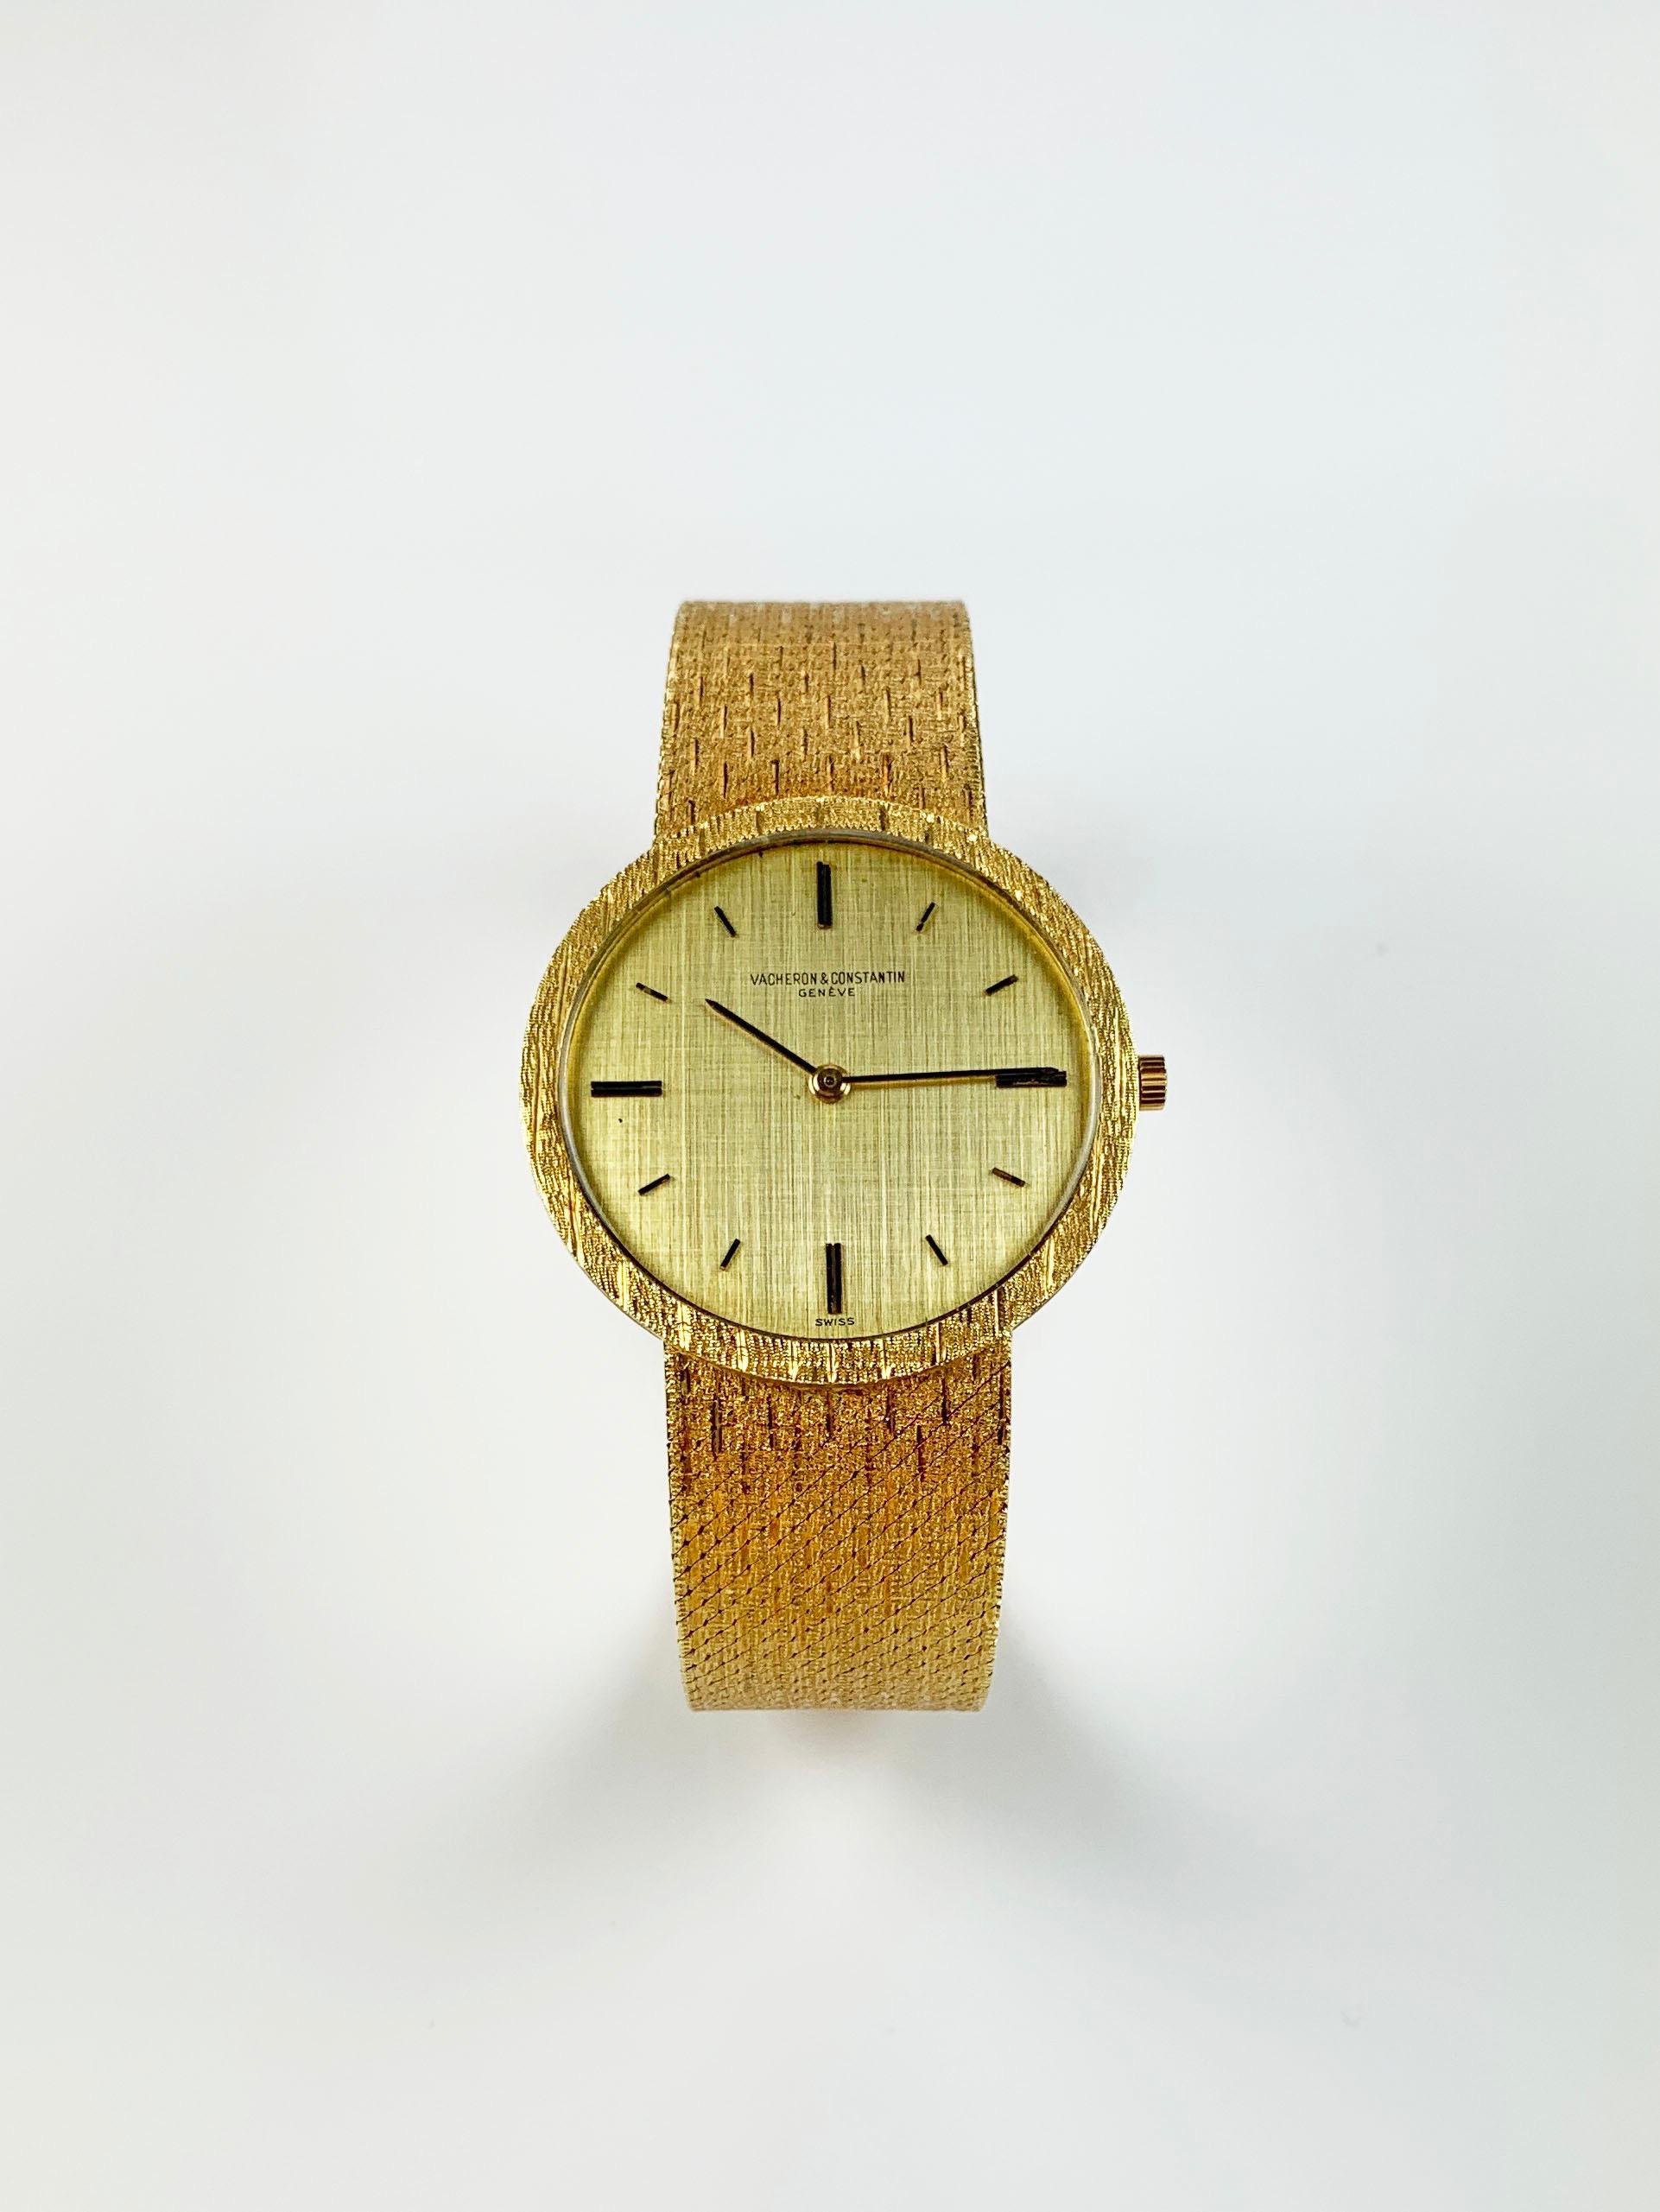 Vacheron Constantin 18 Karat Yellow Gold Ultra Thin Manual Wind Watch, 1960s For Sale 6